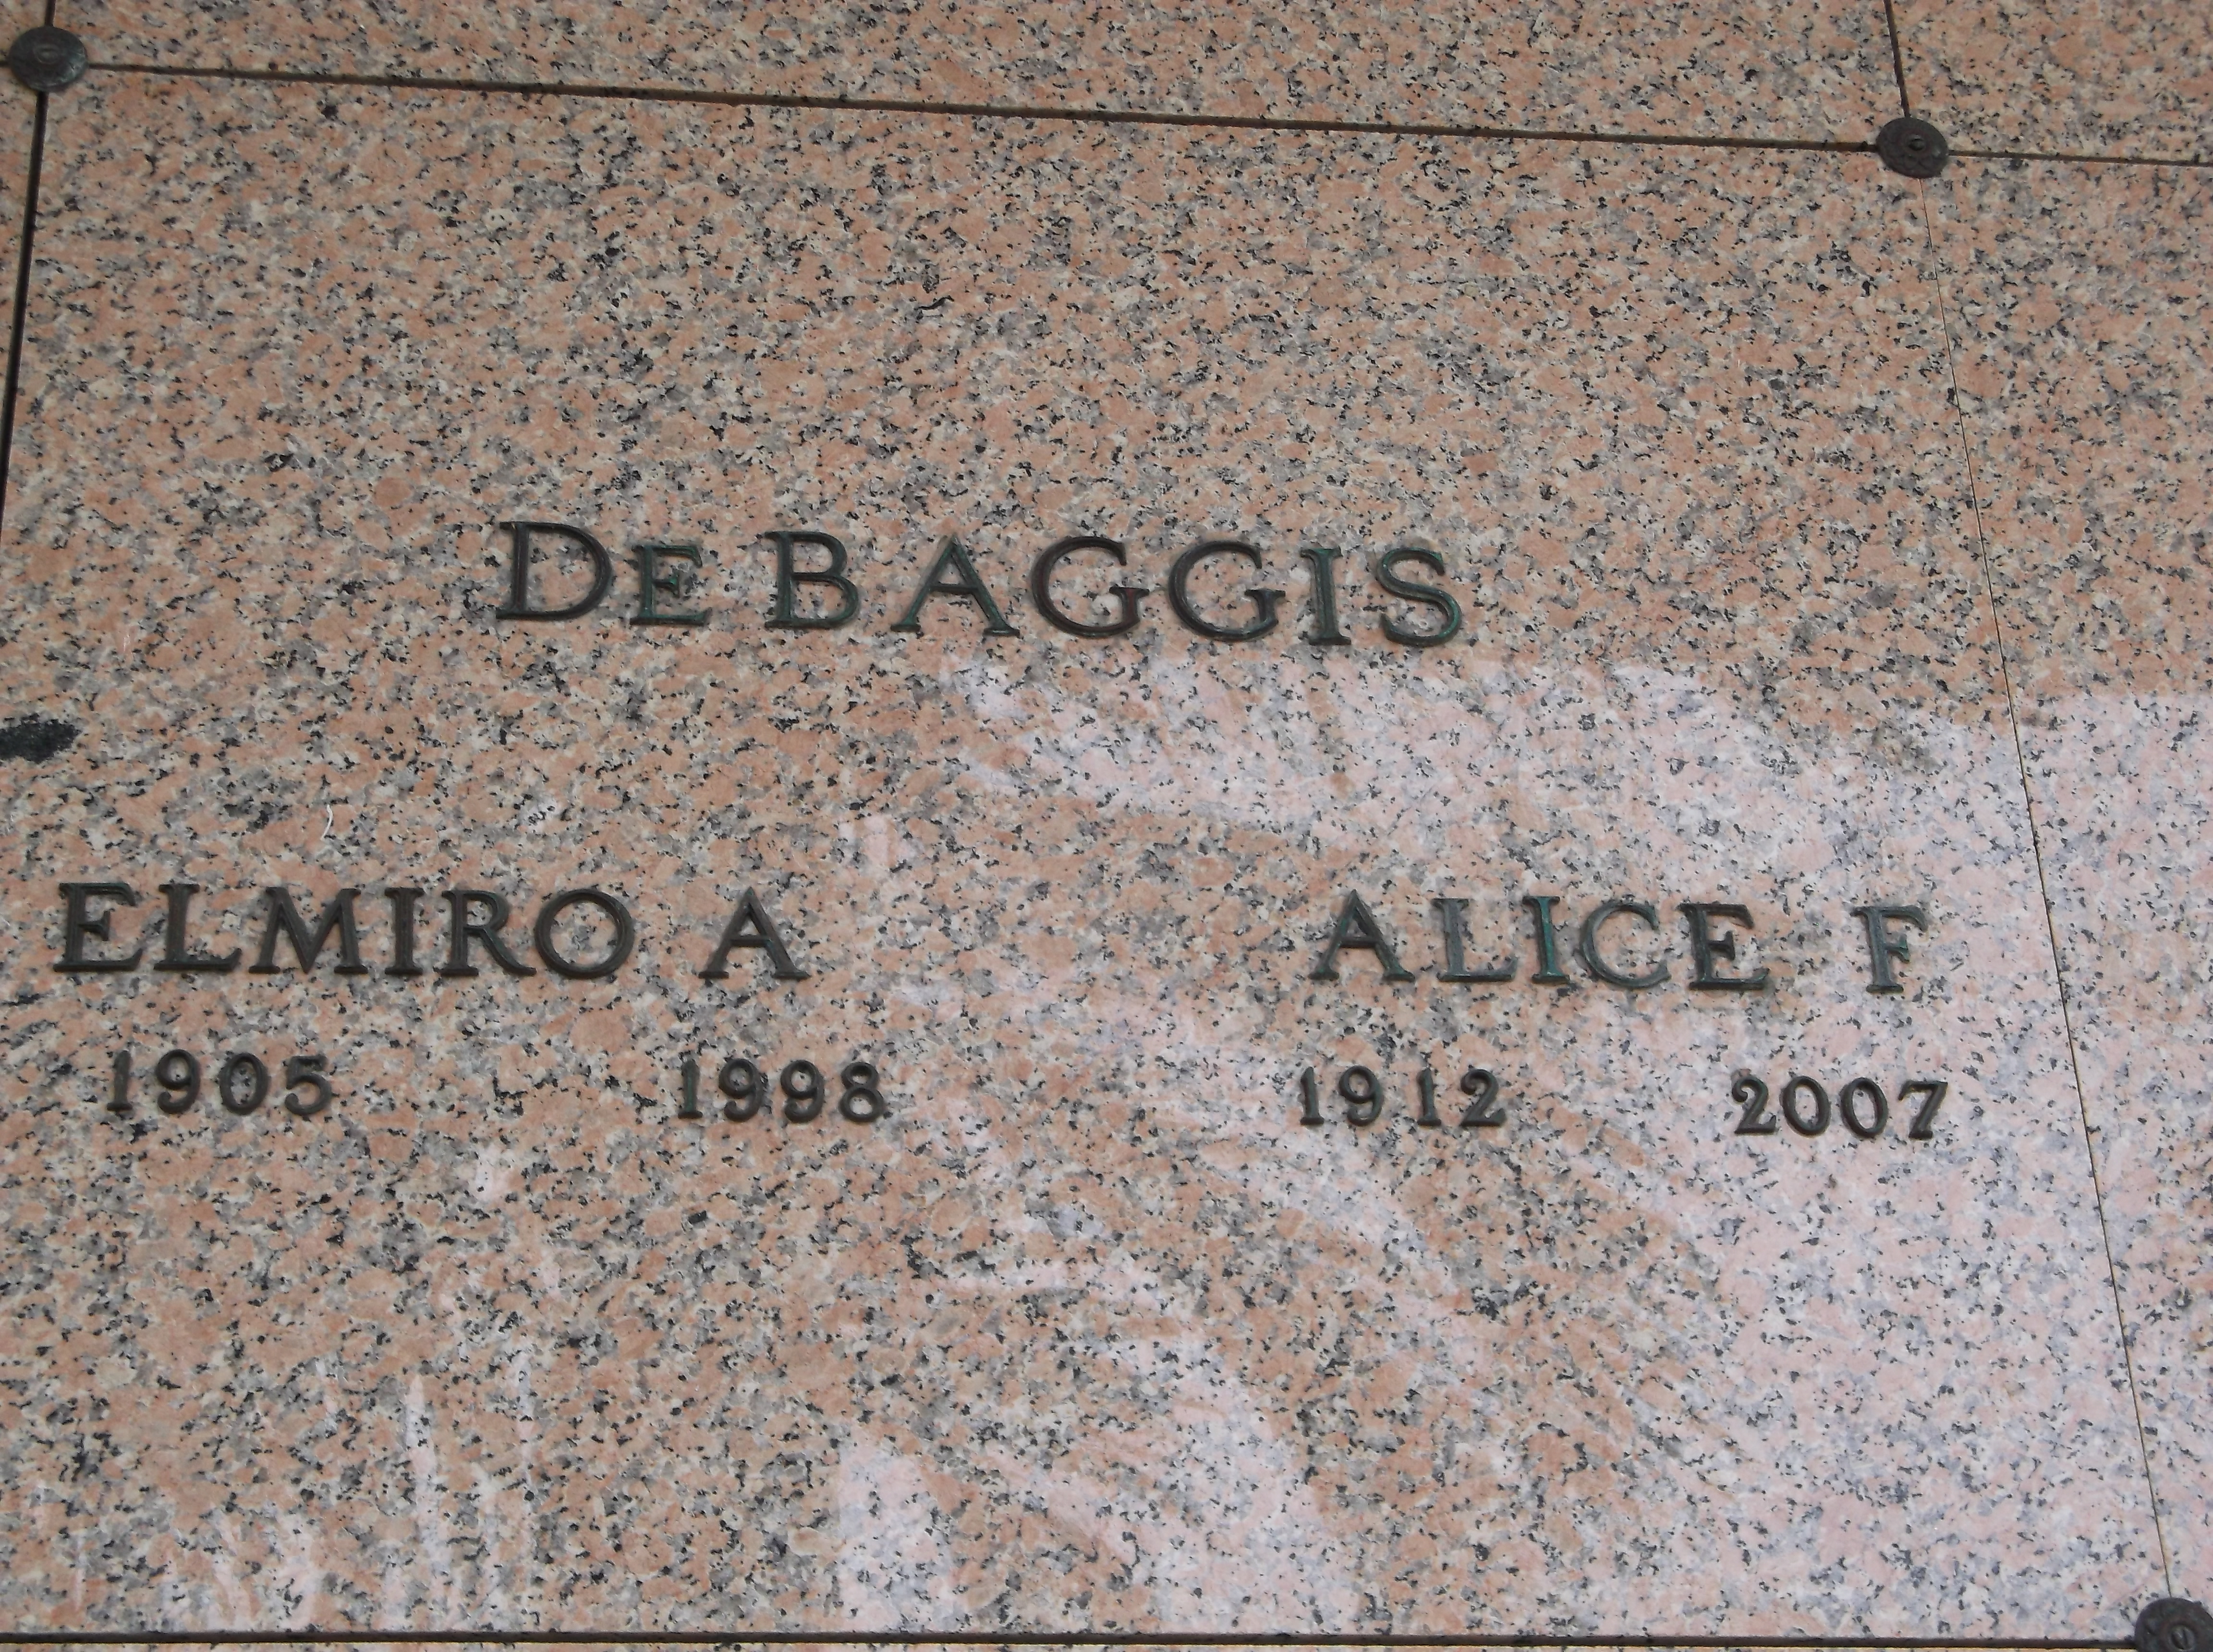 Alice F DeBaggis